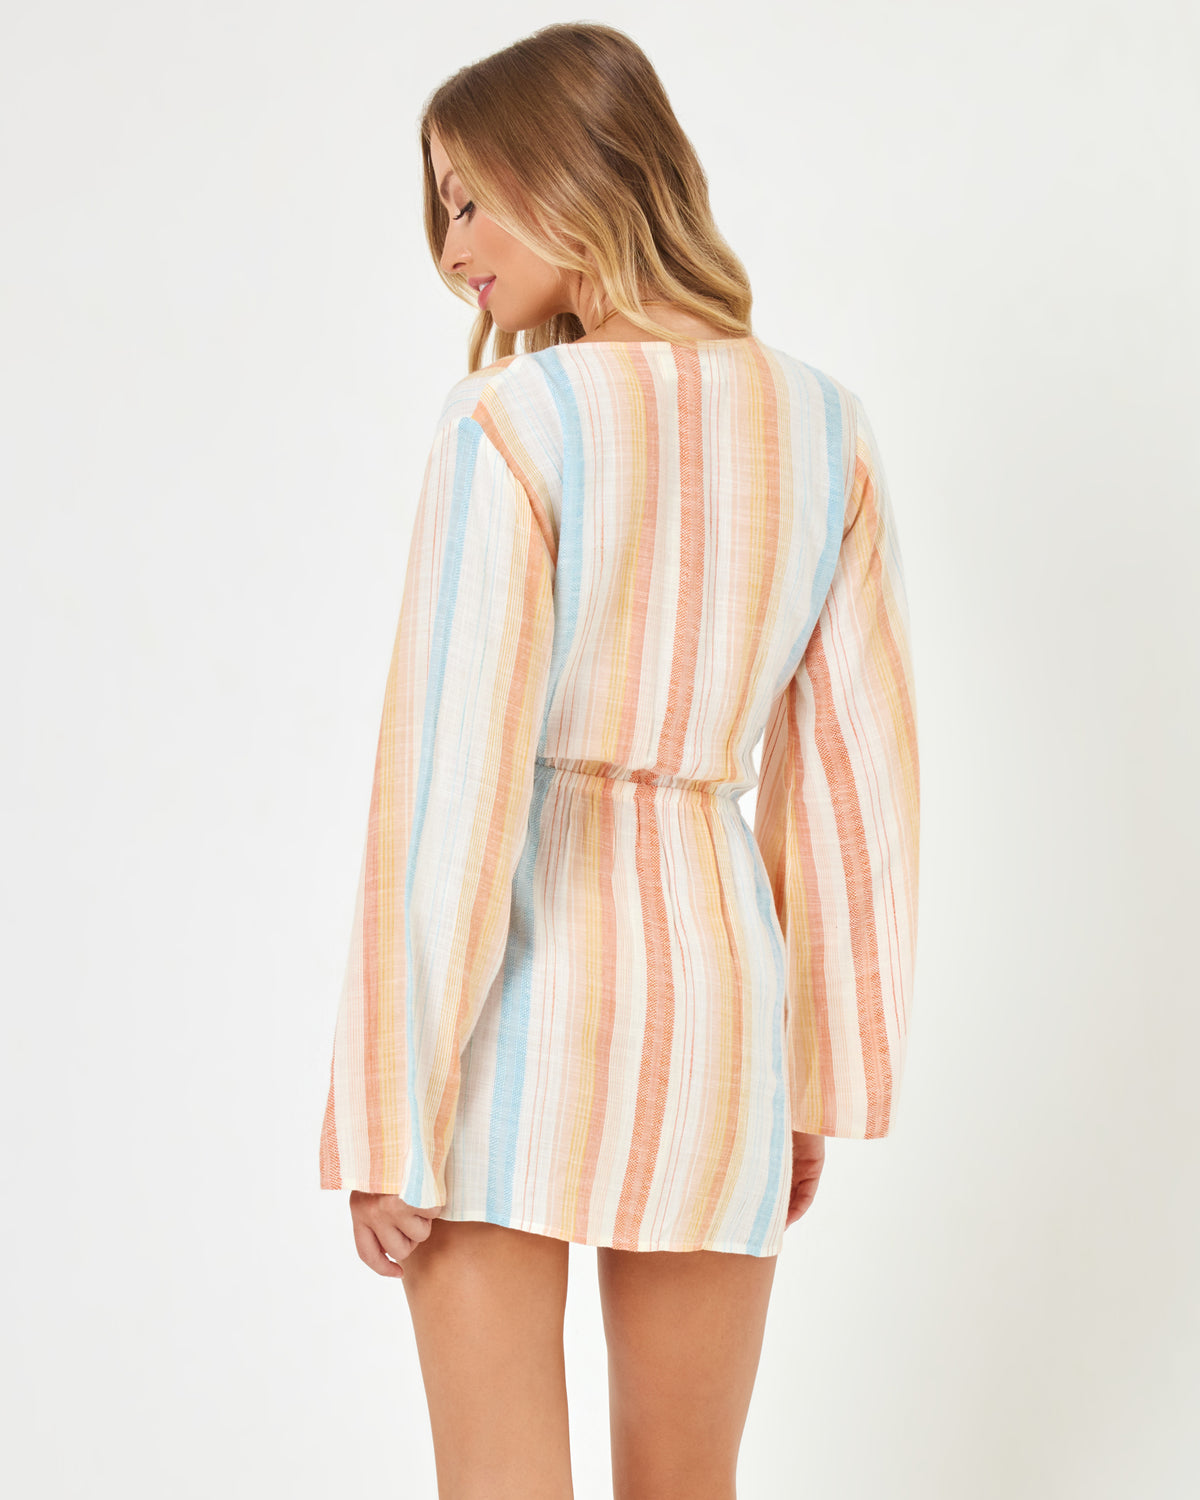 Printed Kristy Dress - Sunset Skies Stripe Sunset Skies Stripe | Model: Taylor (size: S)